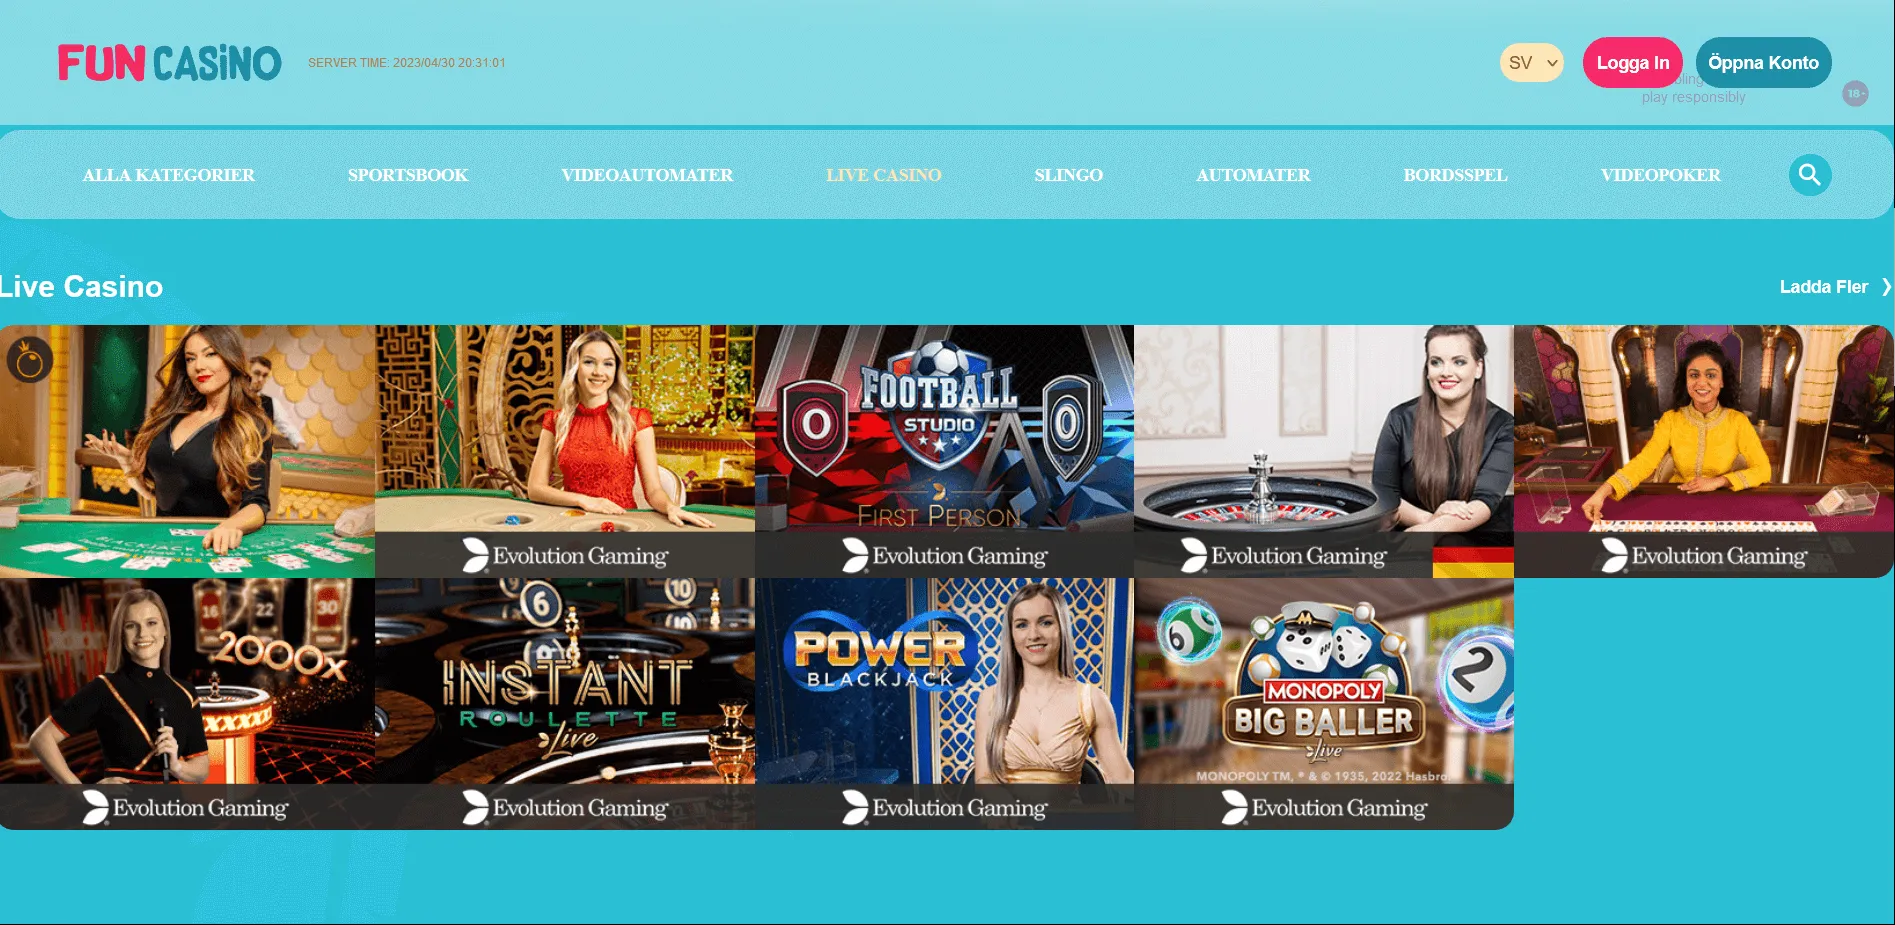 Lagligheten av Fun Casino i Sverige